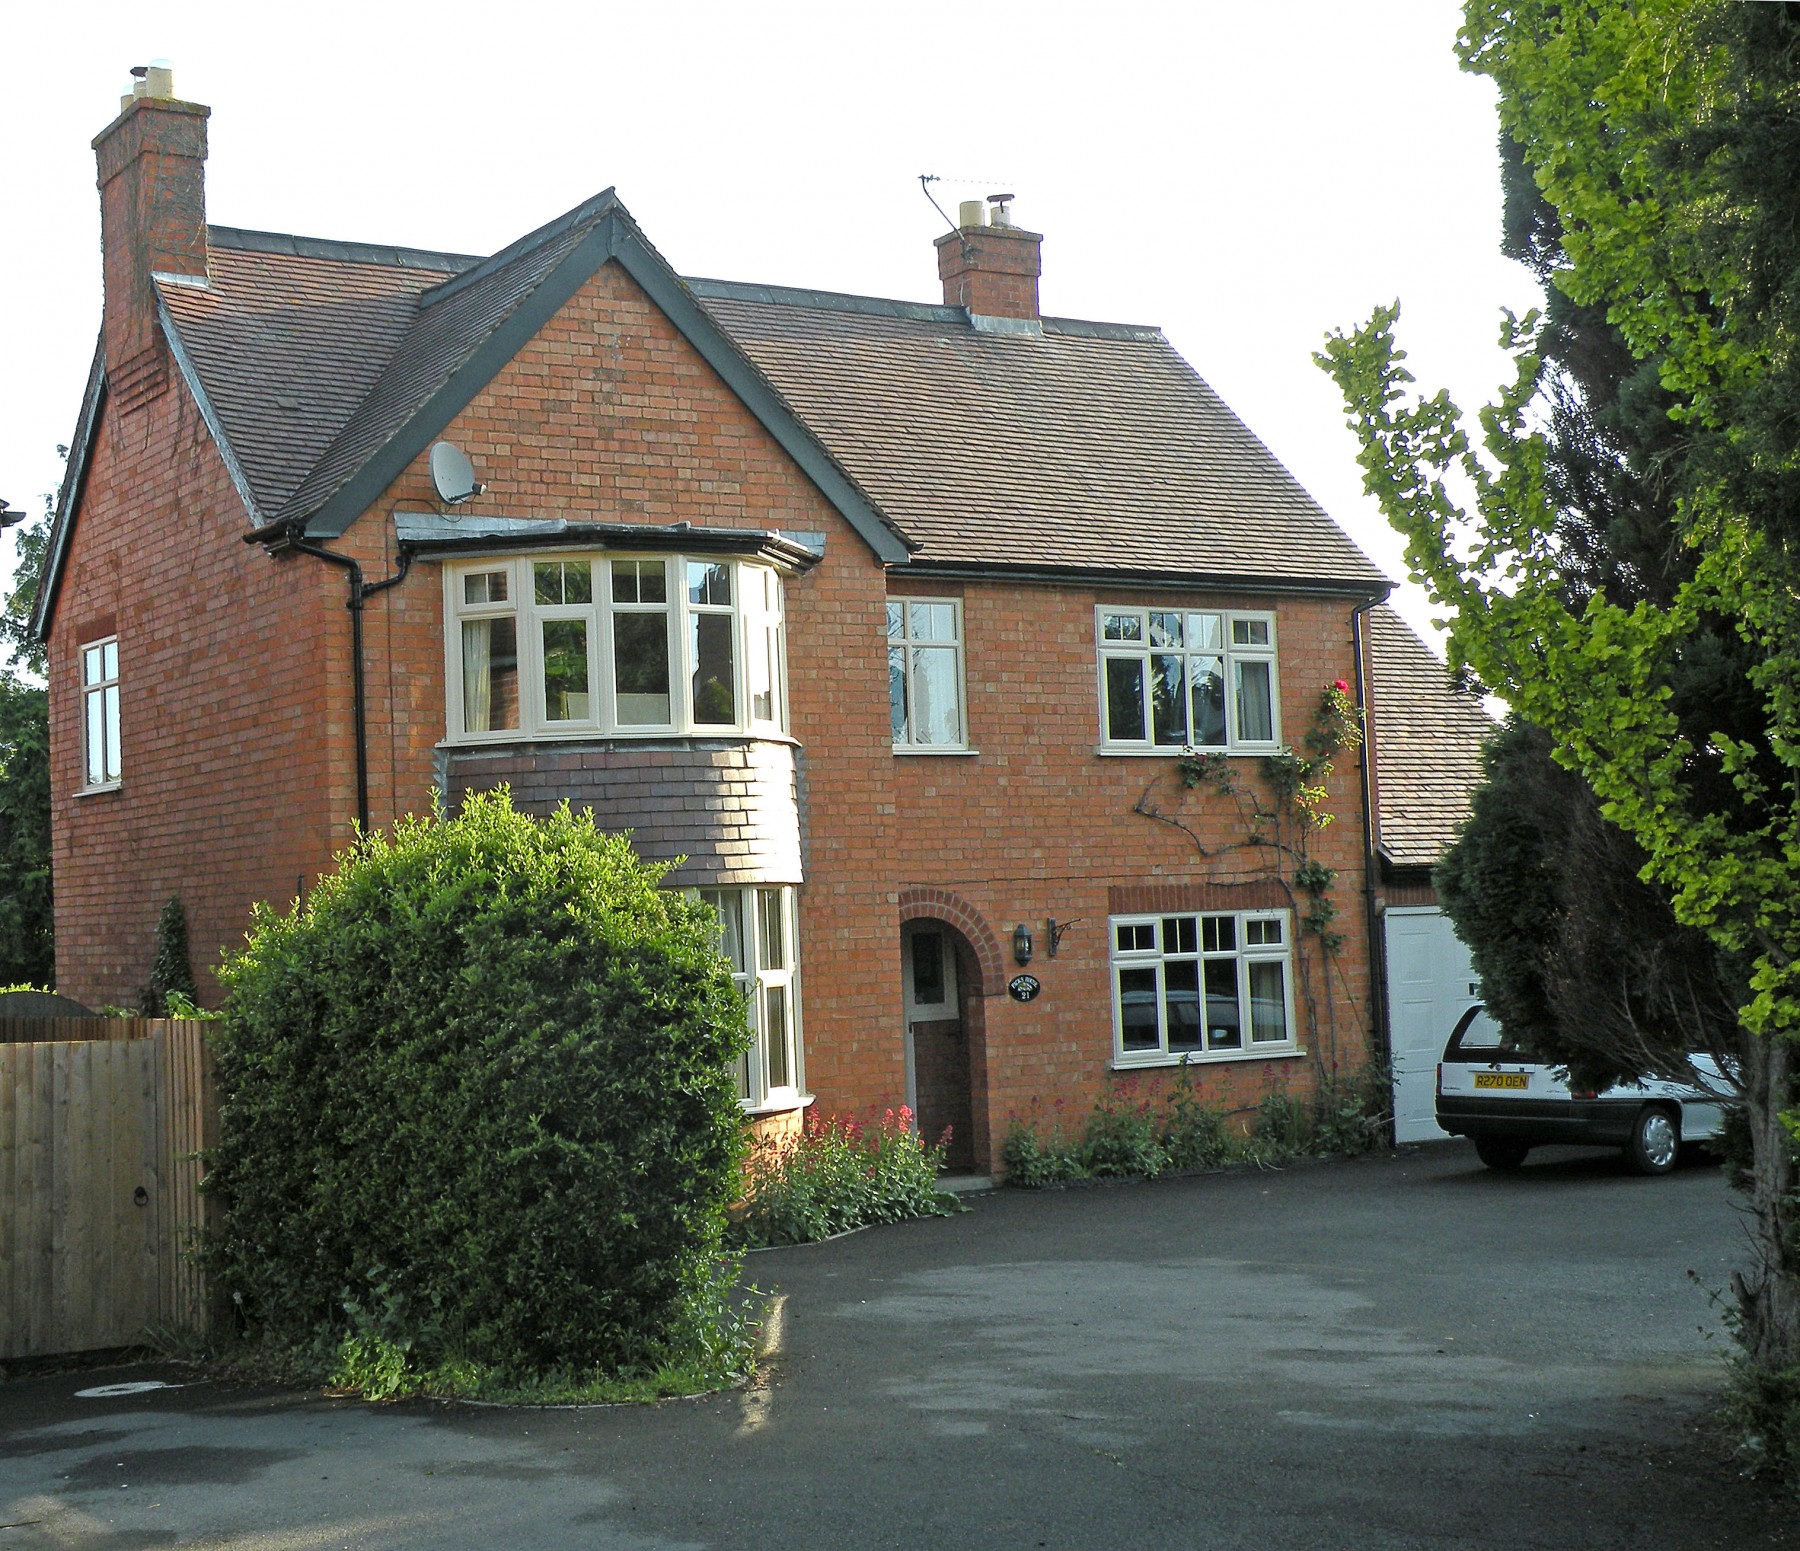 Packs House, Bretforton Road